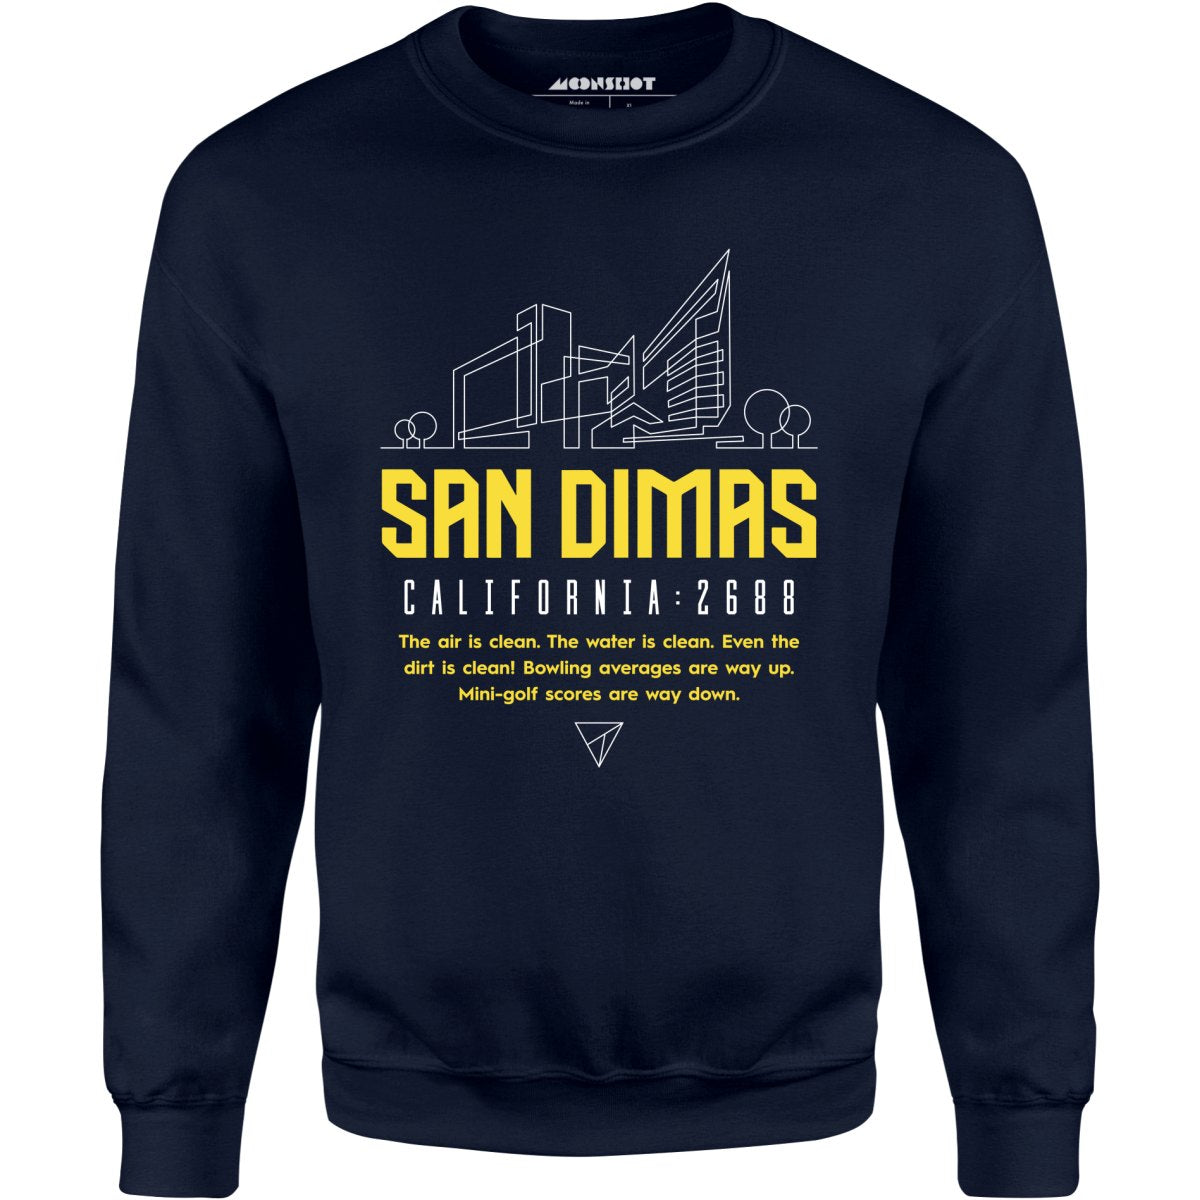 San Dimas 2688 - Bill & Ted's Excellent Adventure - Unisex Sweatshirt